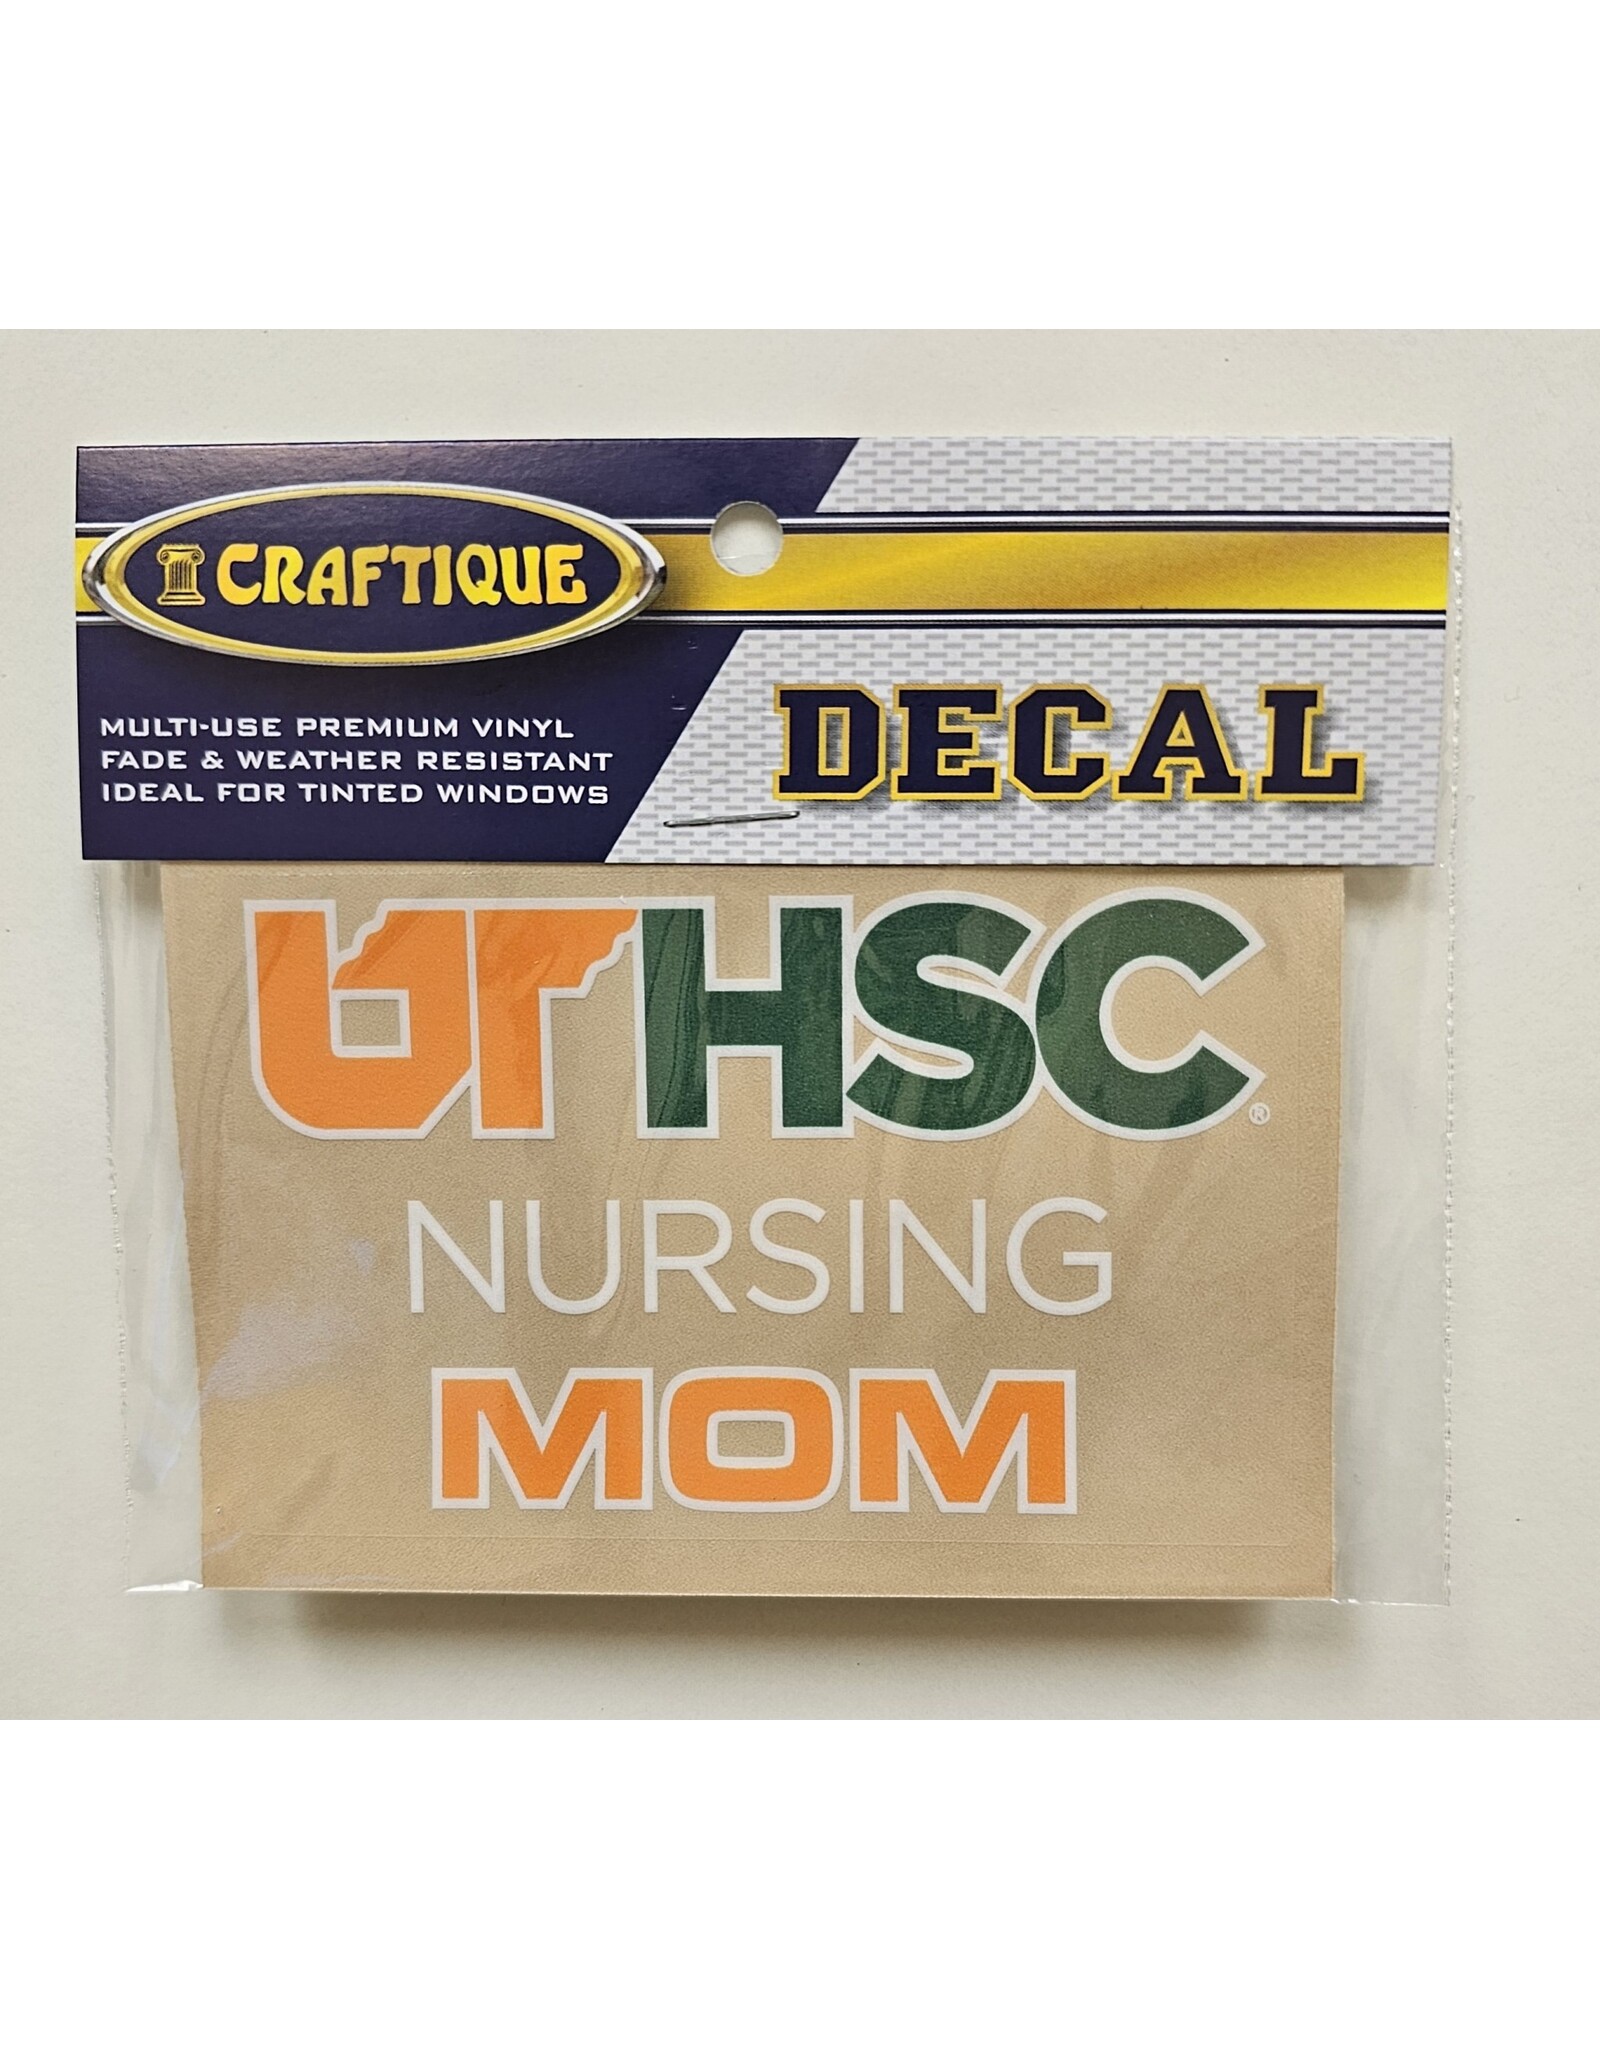 CRAFTIQUE DECAL UTHSC NURSING MOM